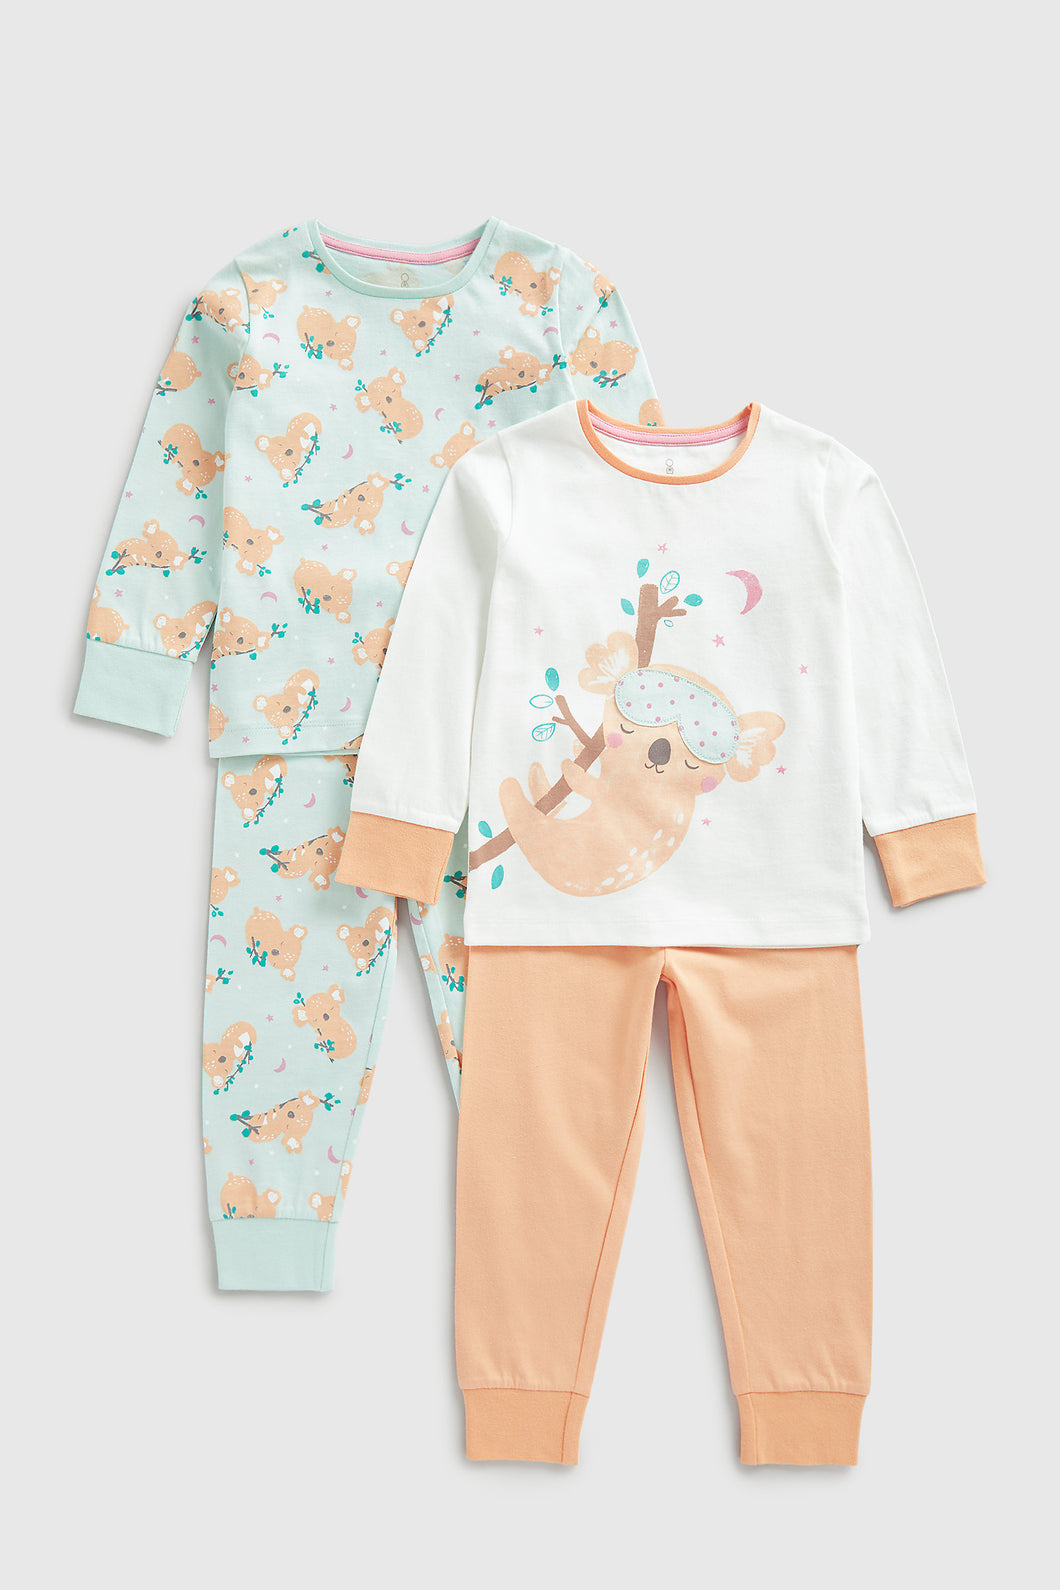 Mothercare Koala Pyjamas - 2 Pack